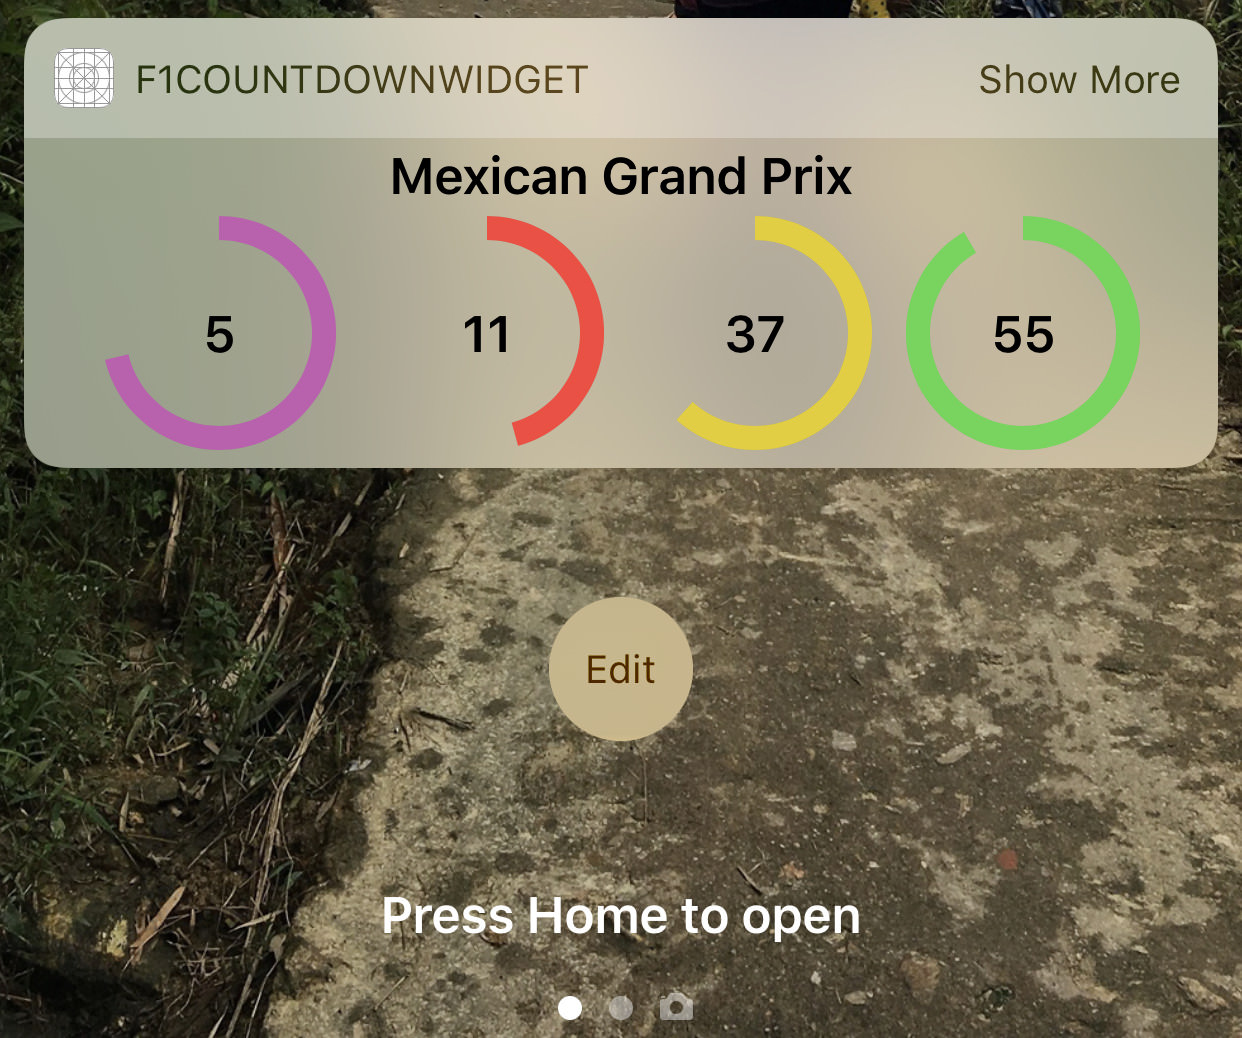 Countdown Widget screenshot